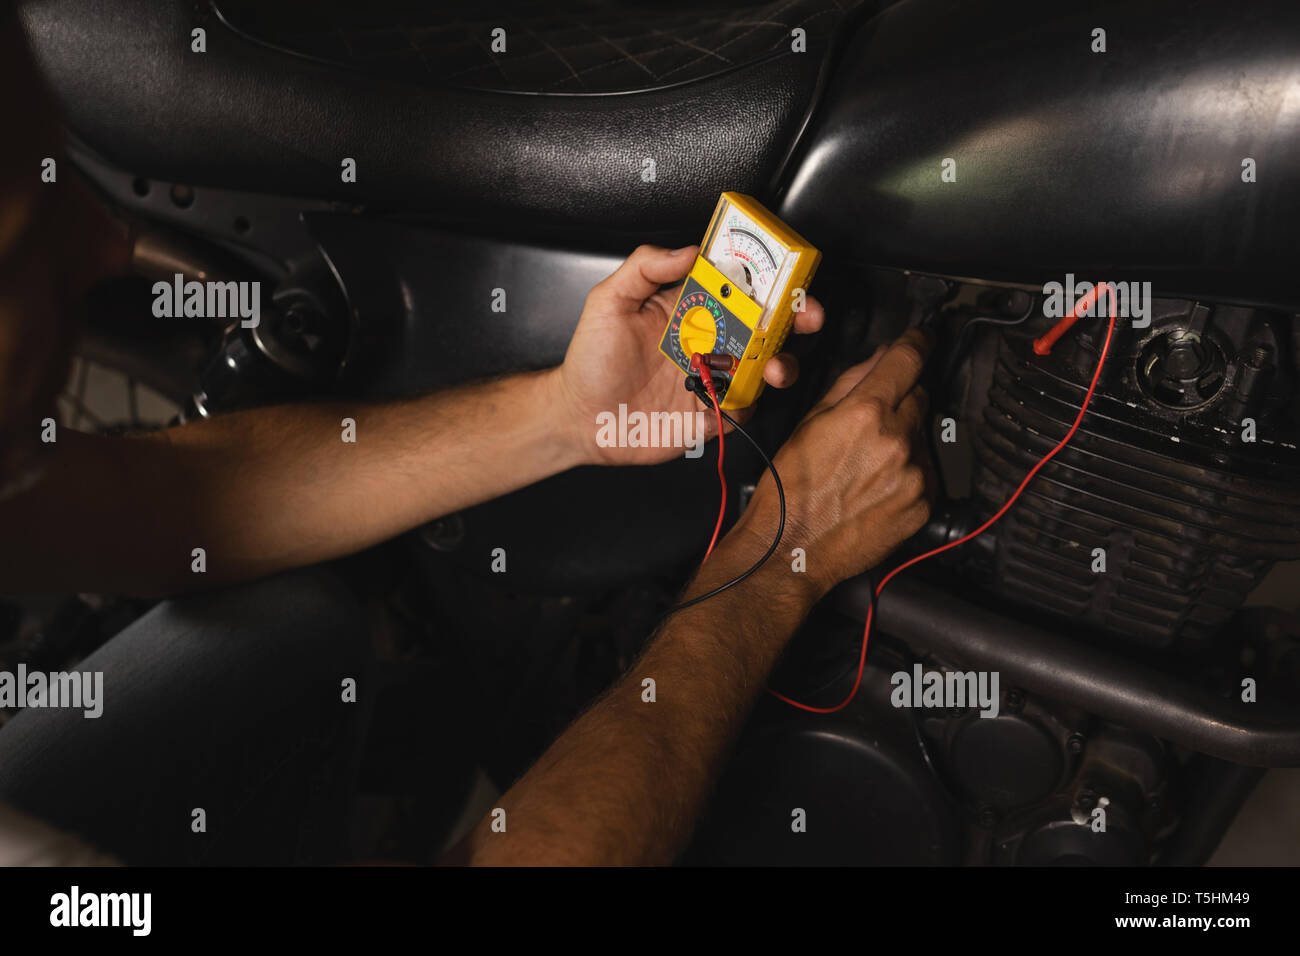 Bike mechanic checking battery of bike with multimeter Stock Photo